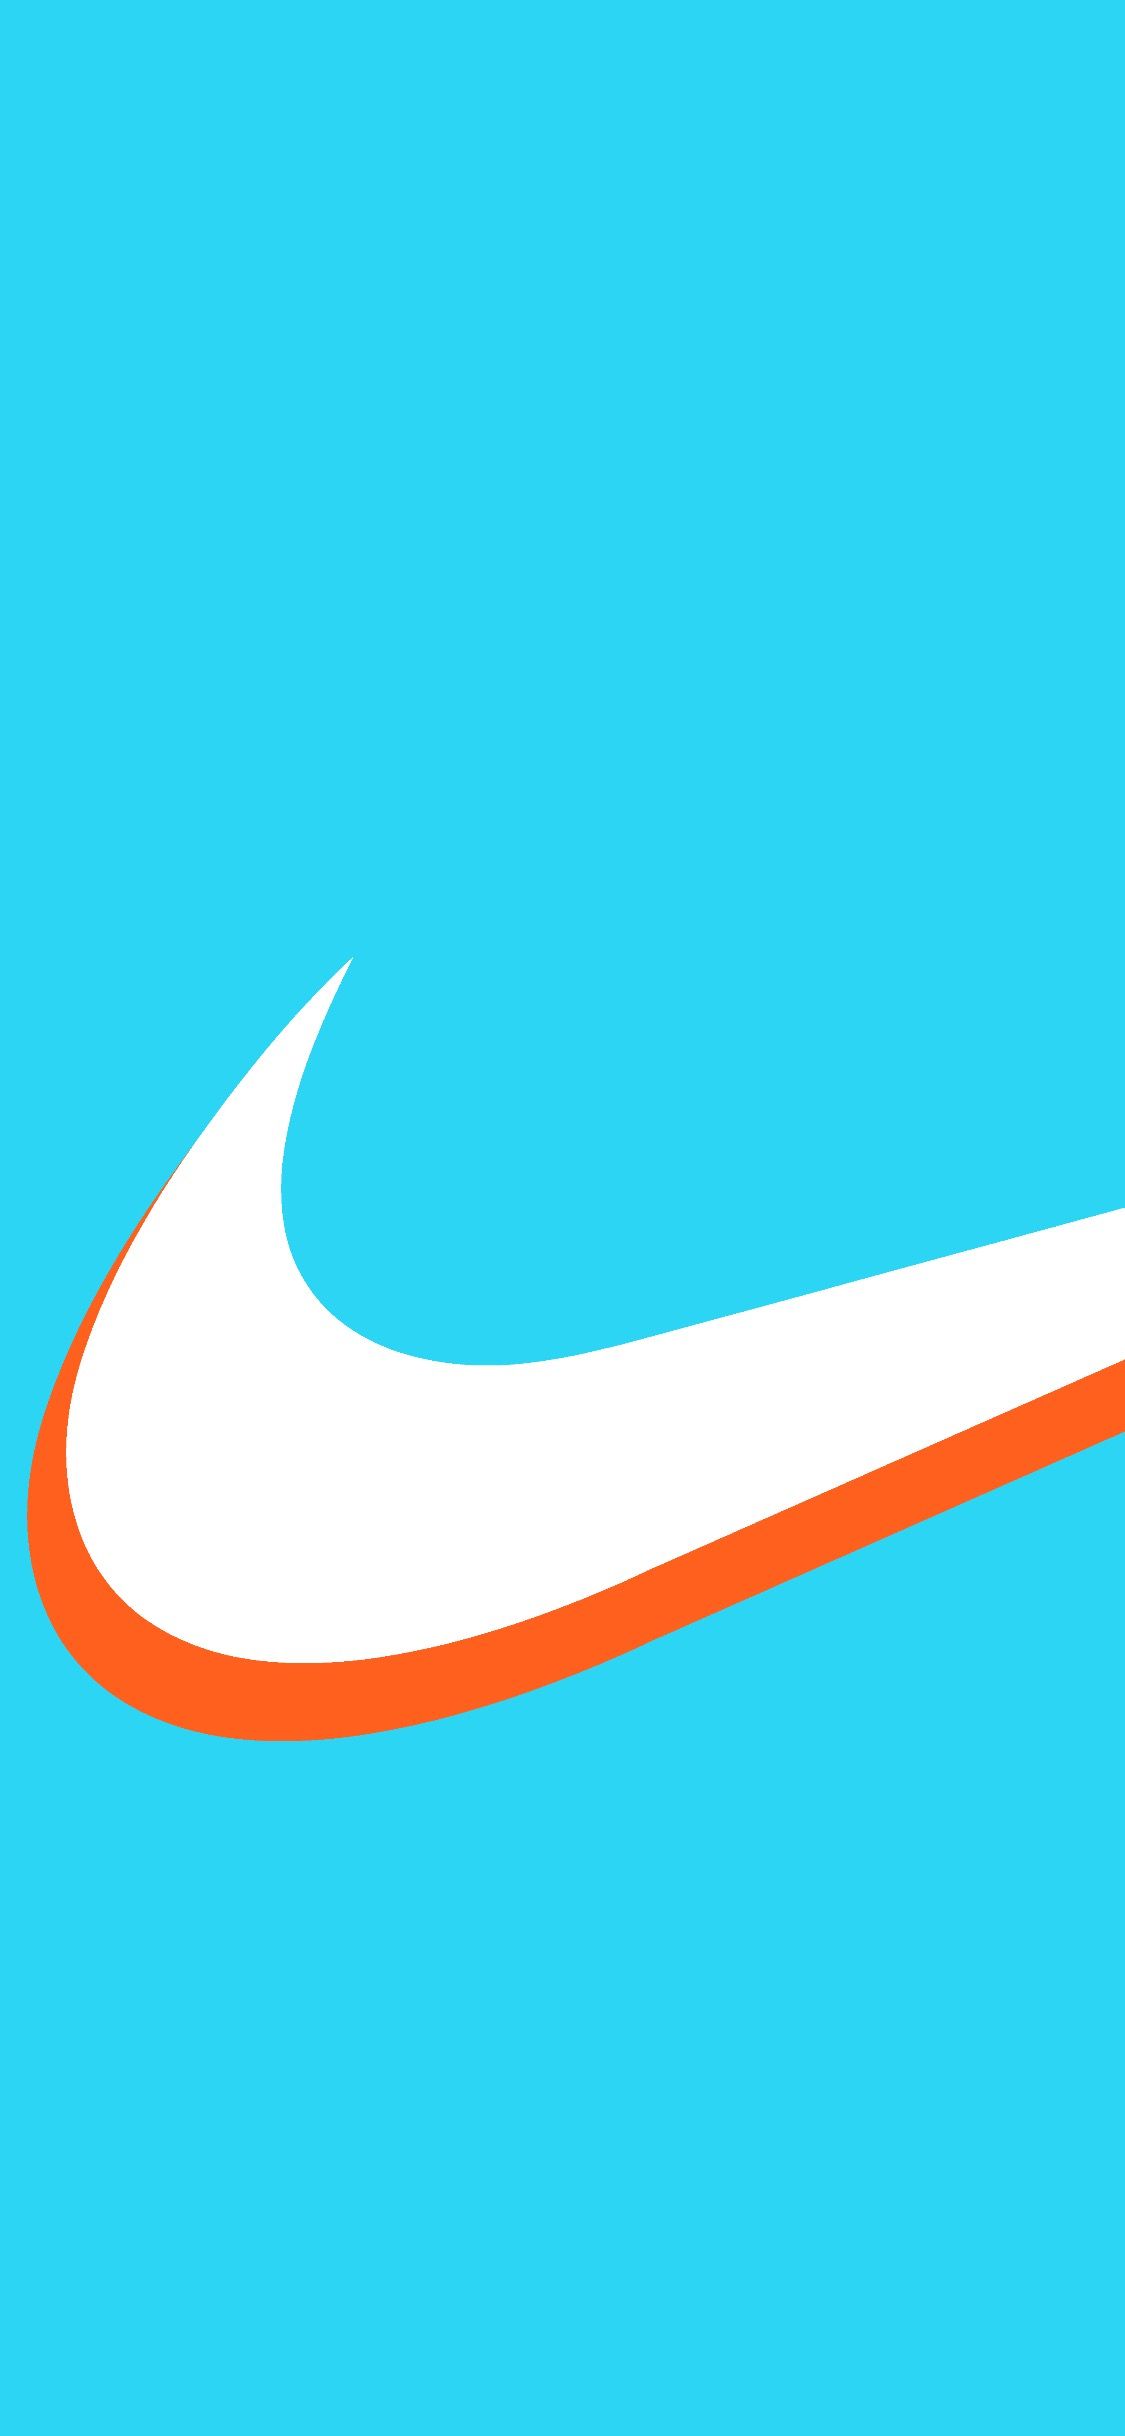 Orange Nike Iphone Wallpapers